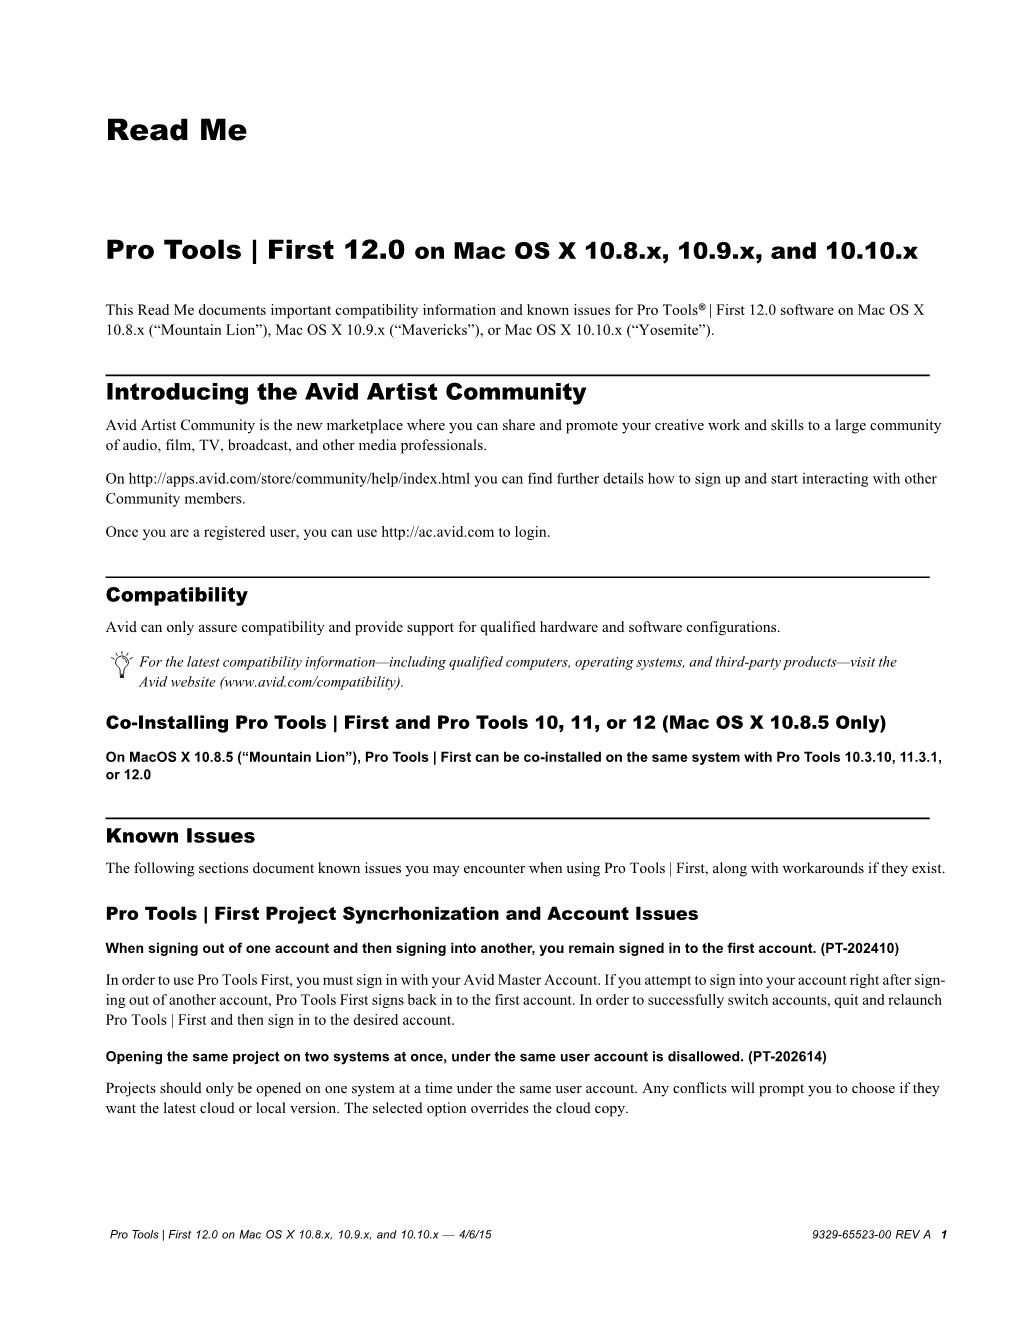 Pro Tools | First 12.0 Read Me (Mac OS X)